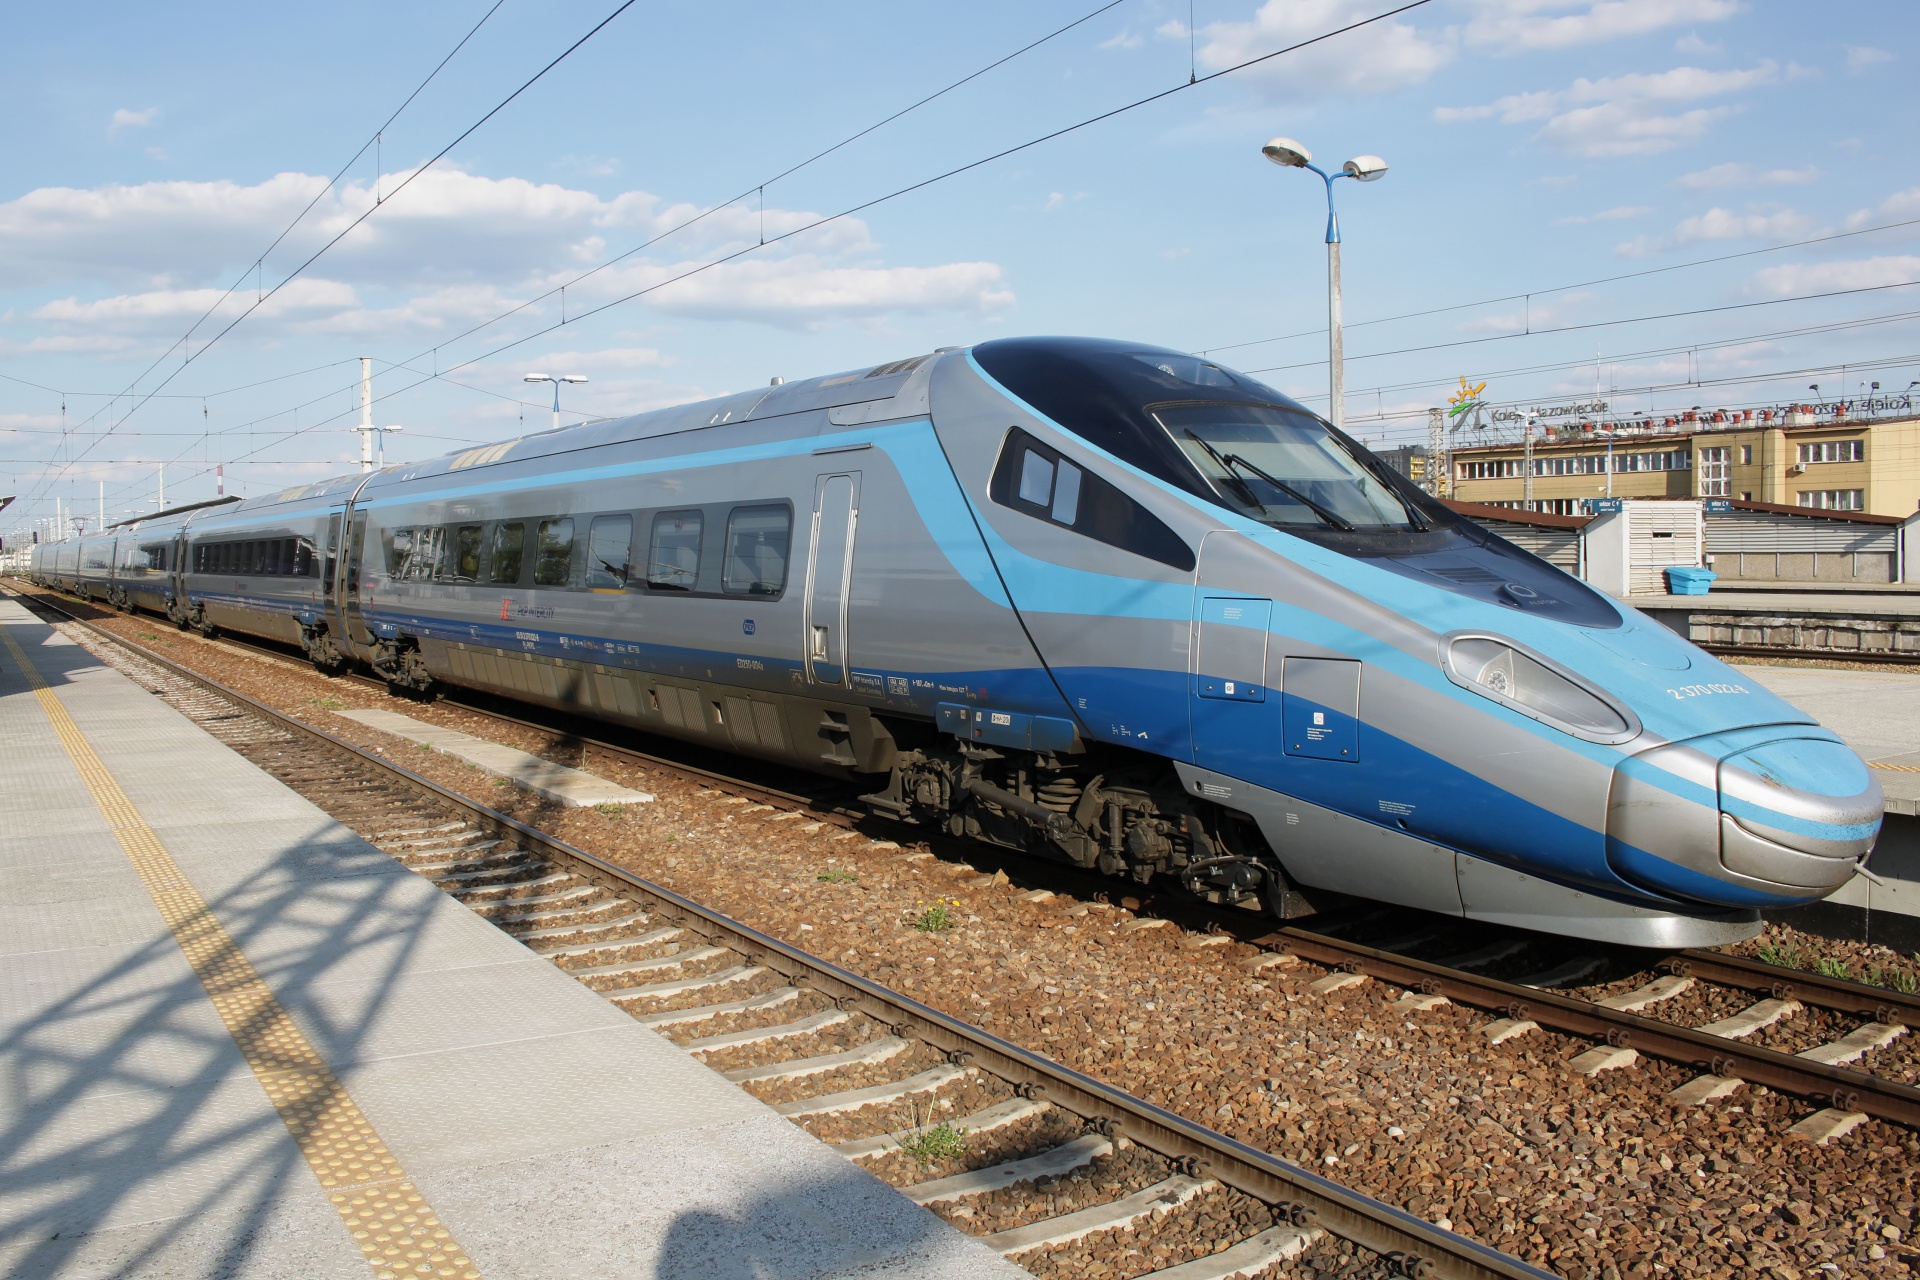 ED250-004 (Vehicles » Trains and Locomotives » Alstom ETR 610 Pendolino)